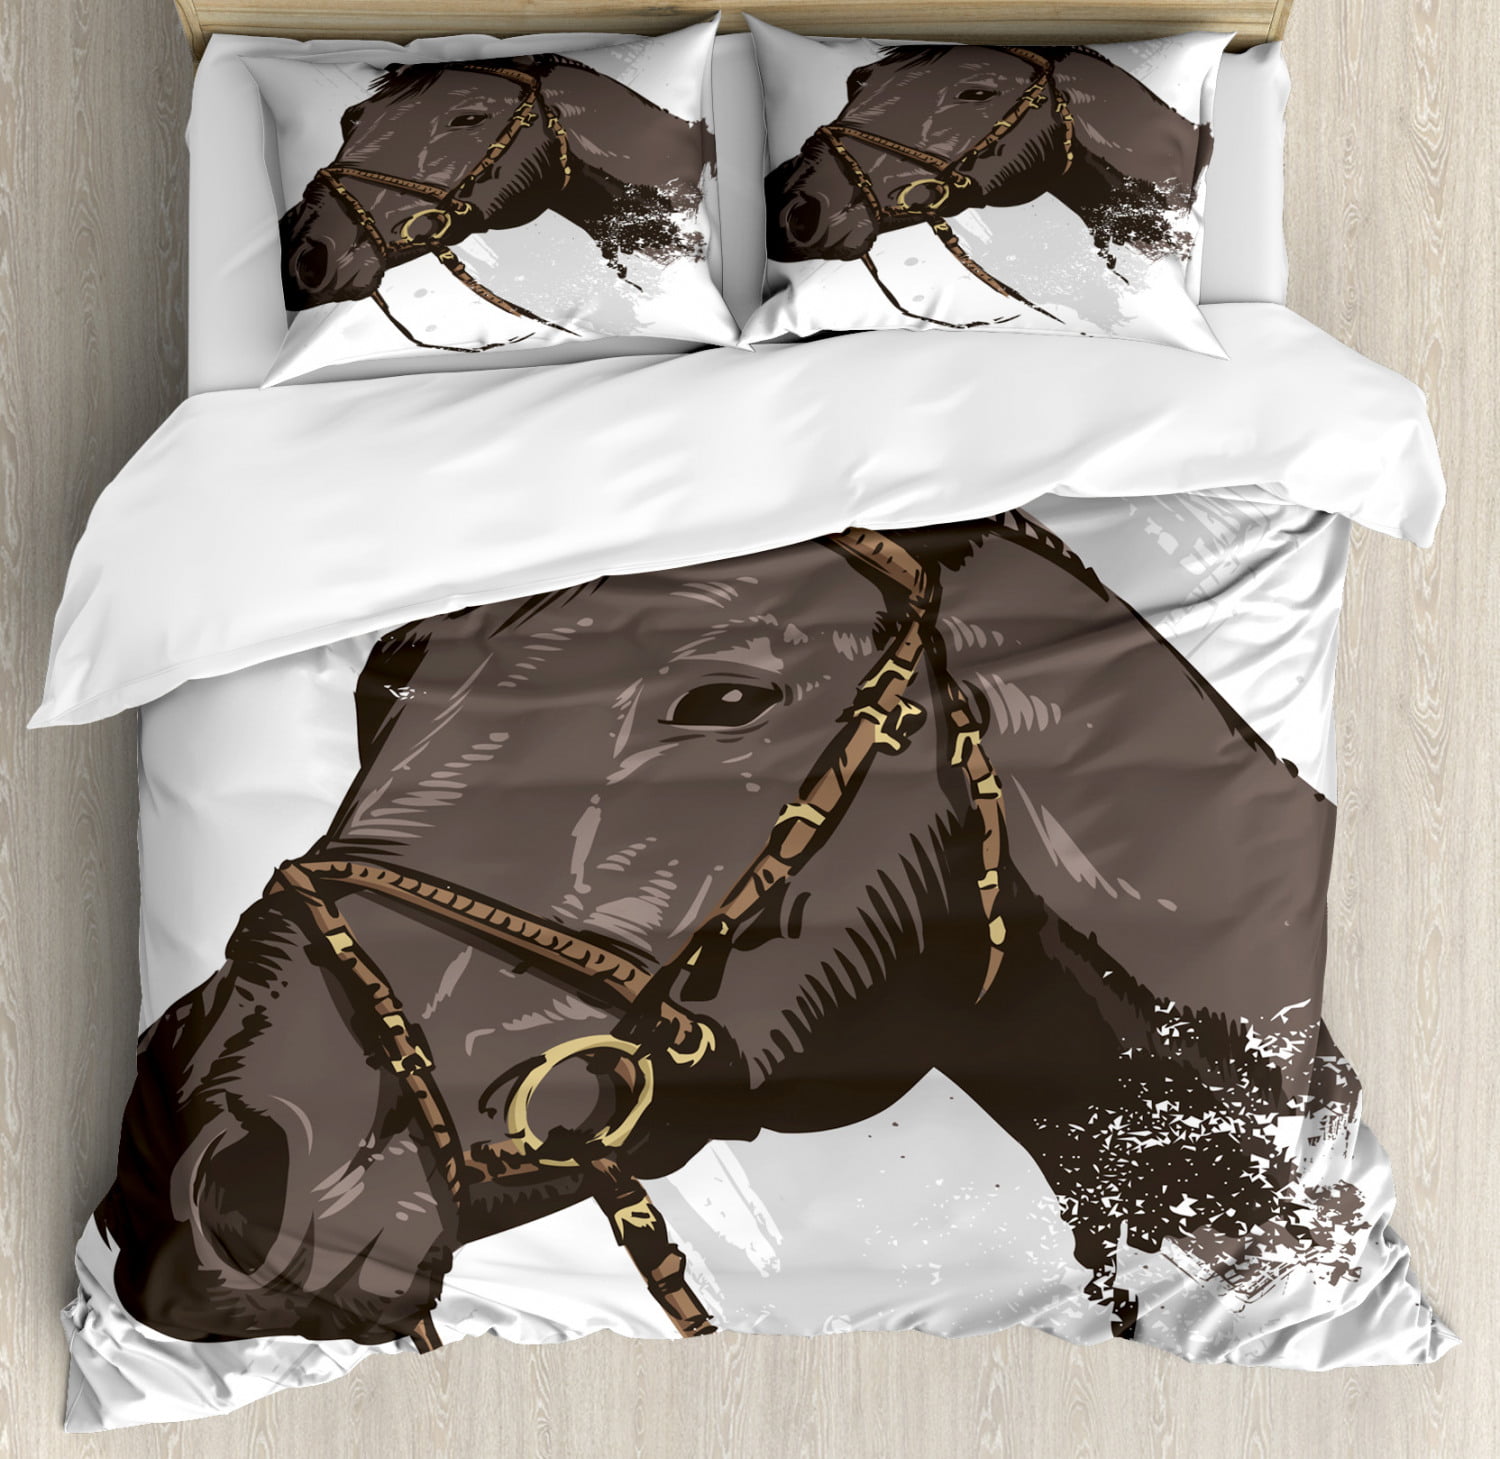 Equestrian Queen Size Duvet Cover Set, Duvet Cover Horse Design